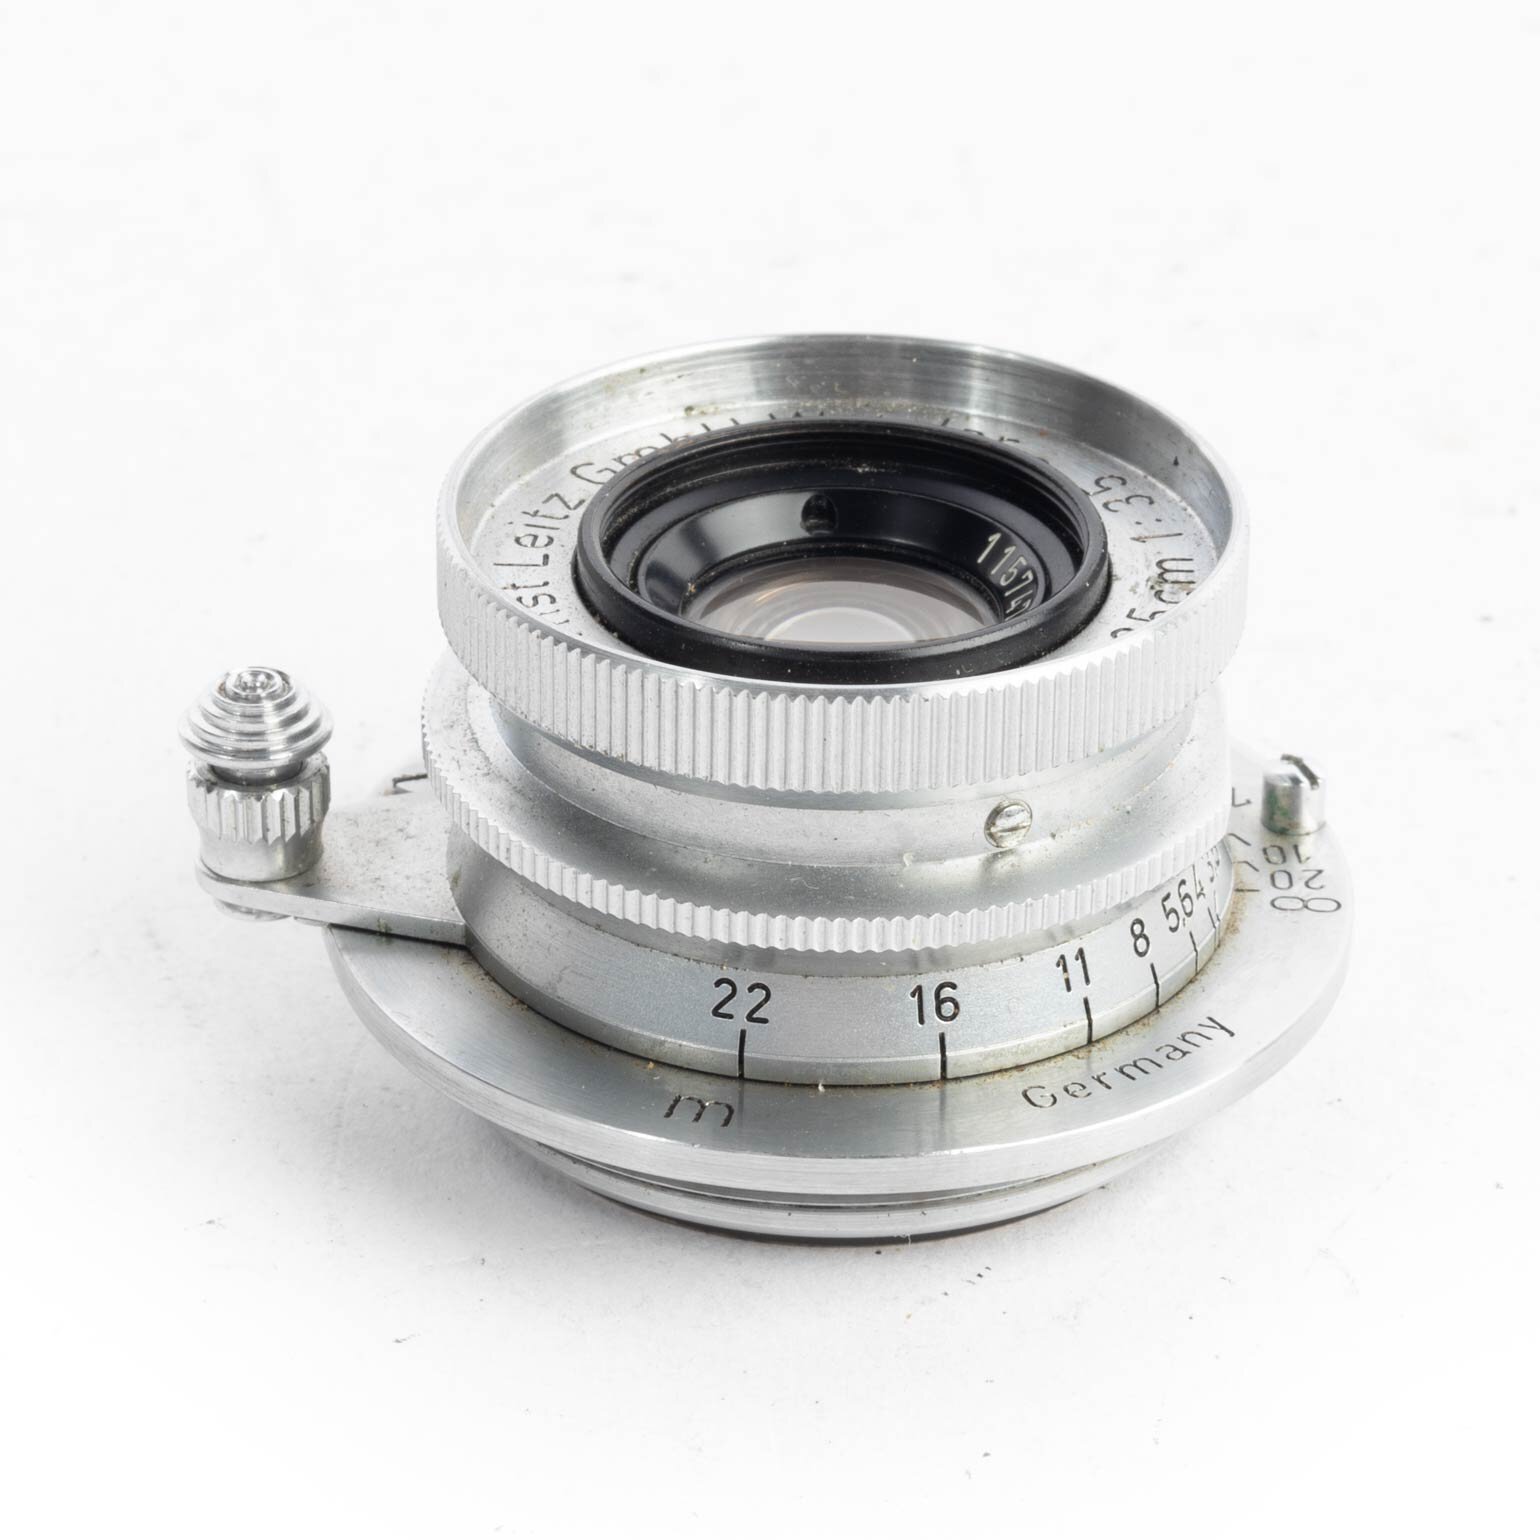 Leica Summaron 3.5/35mm LTM M39